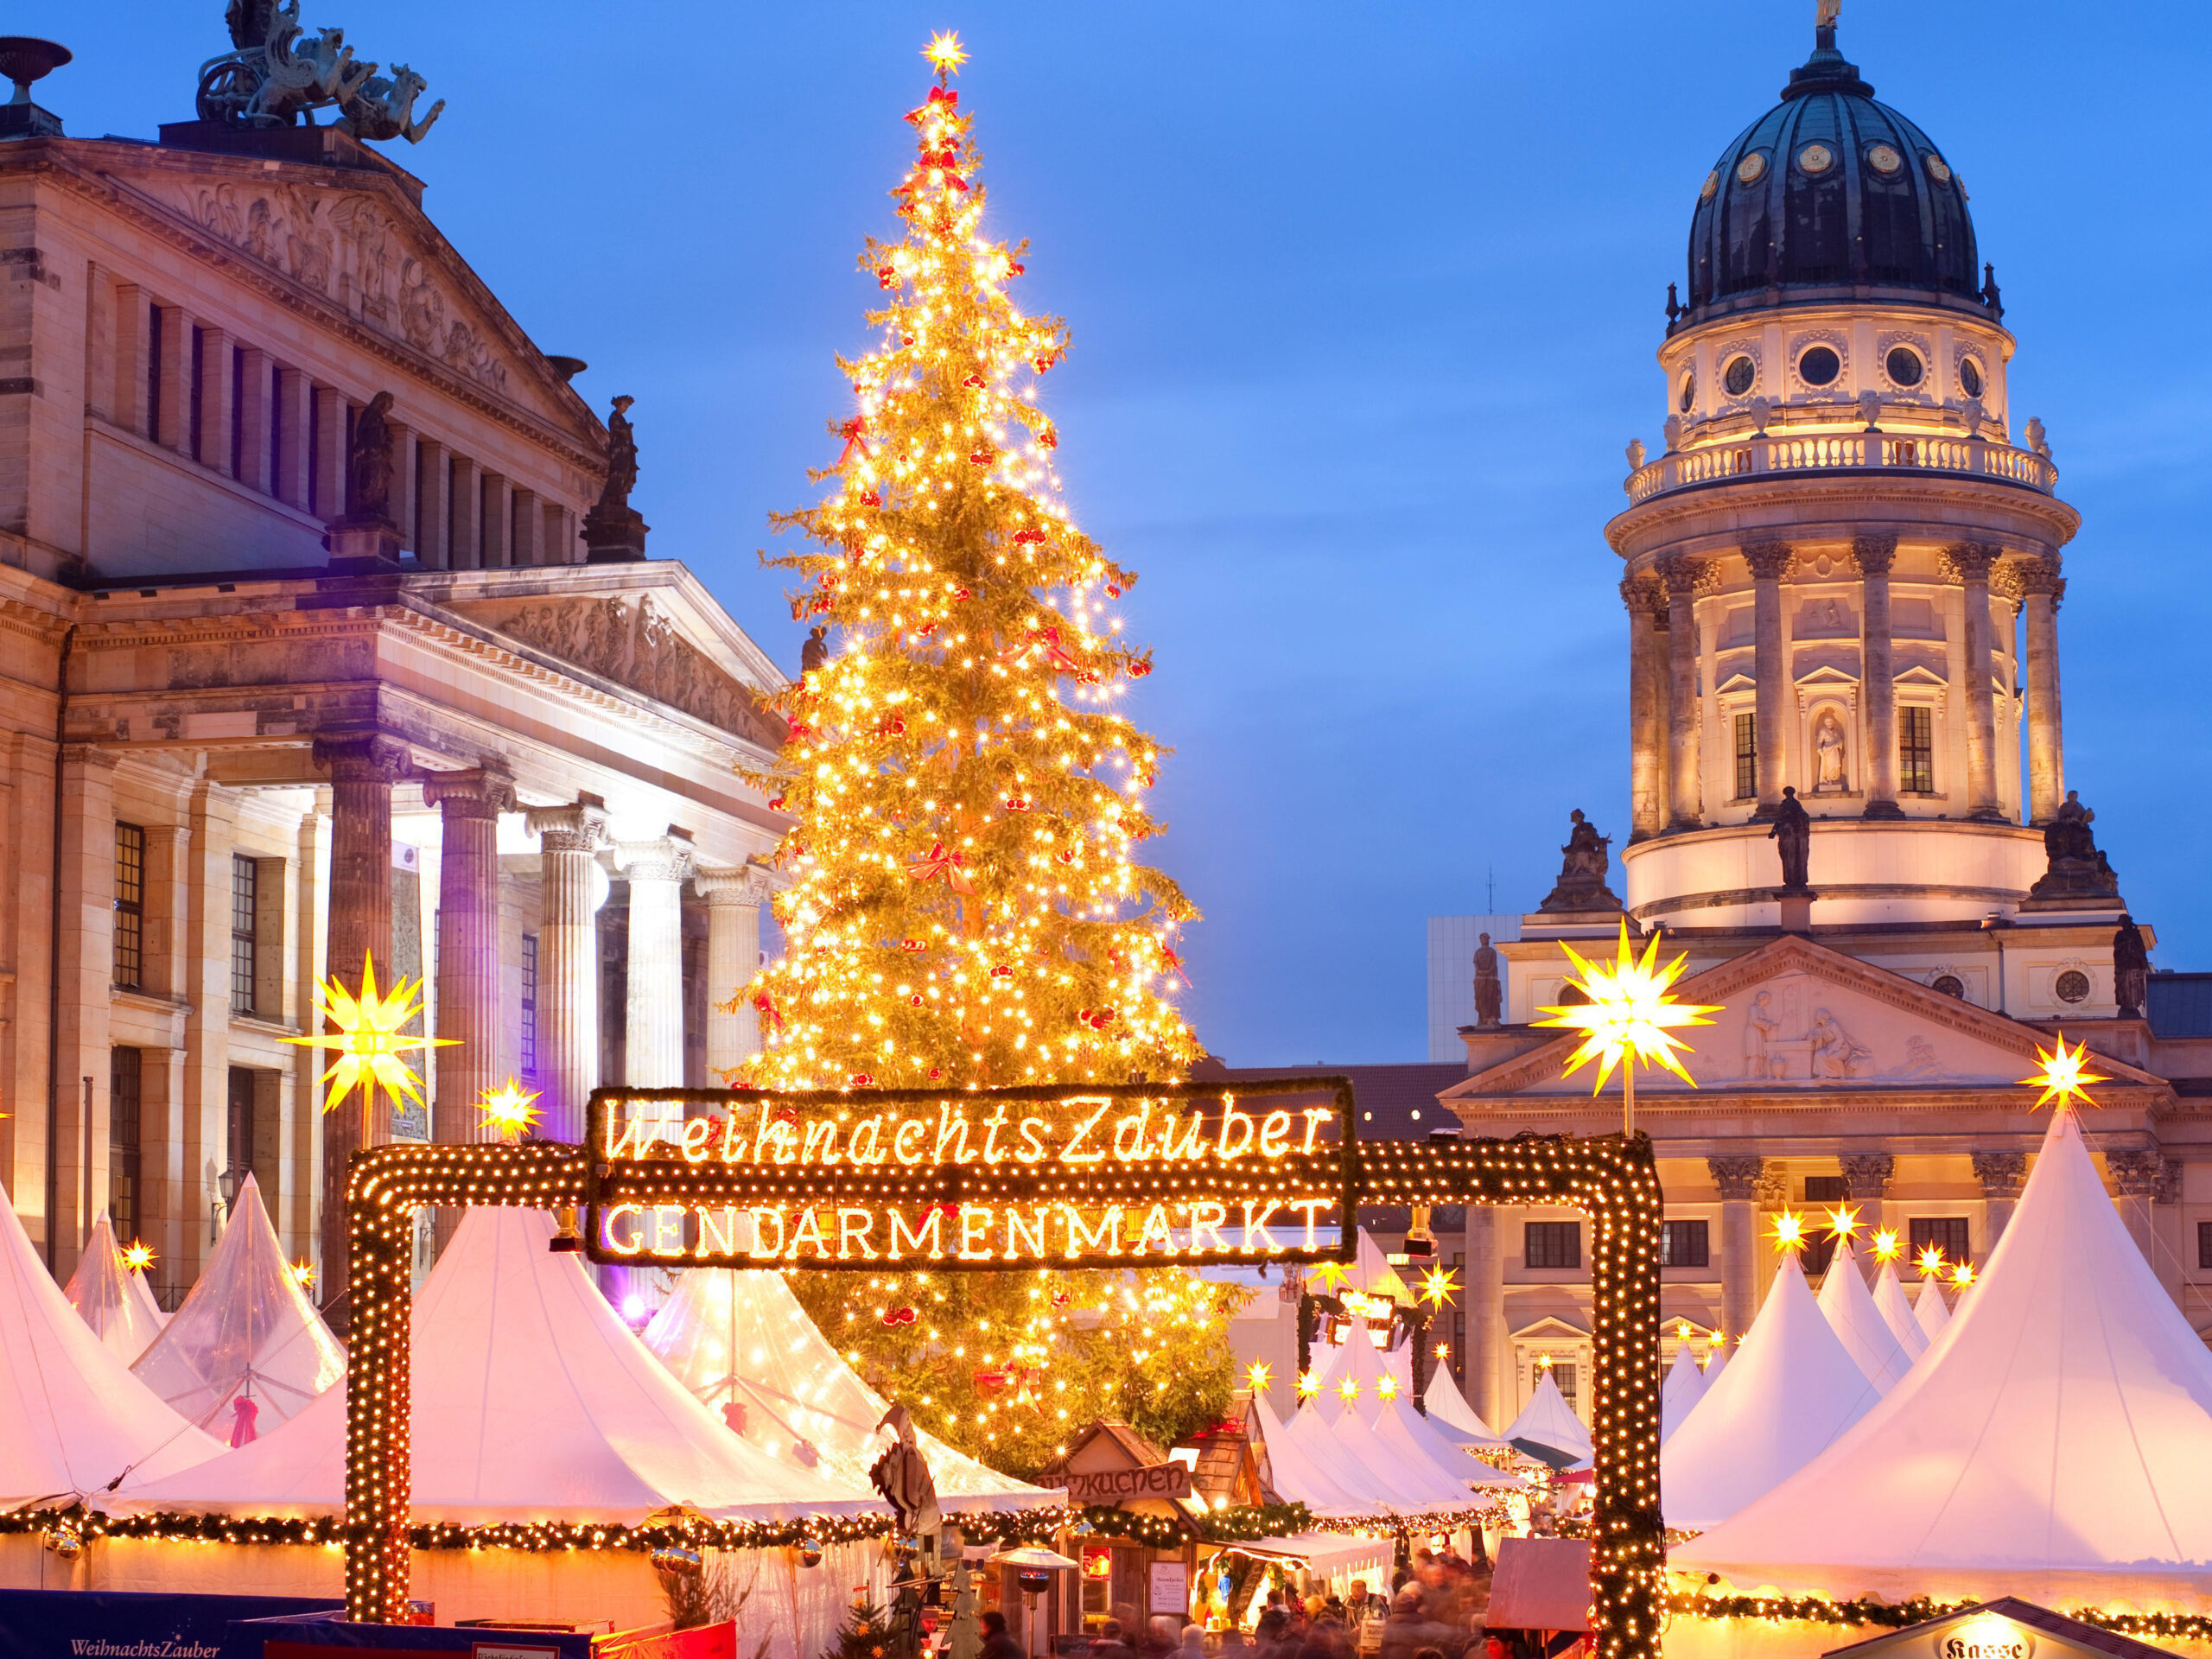 Christmas getaways from Dubai - Berlin, Germany